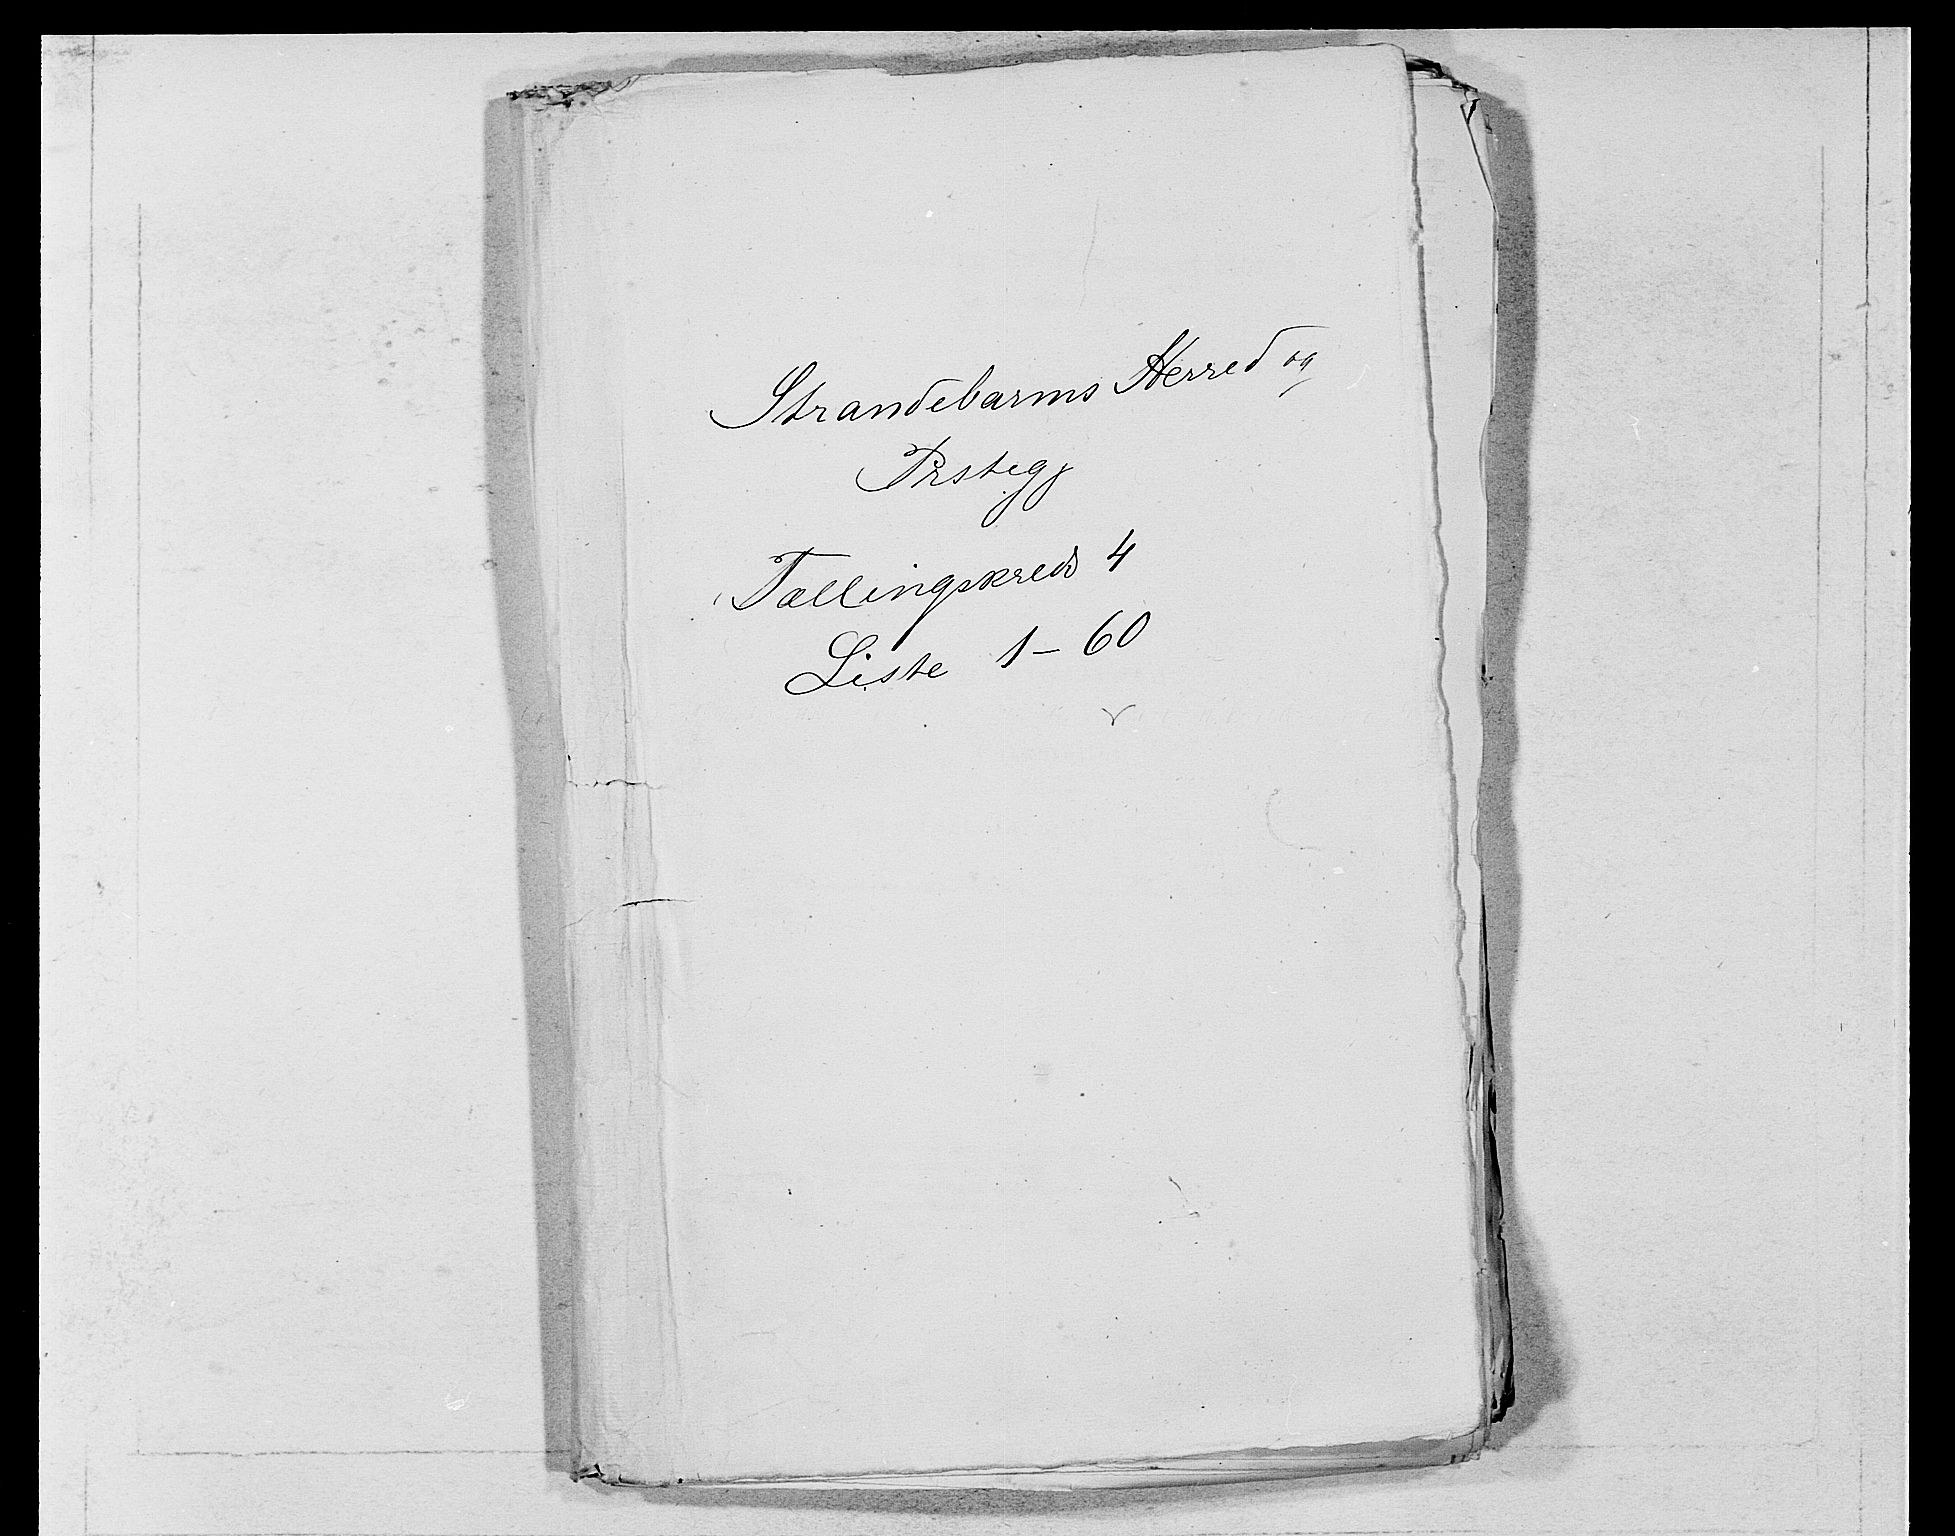 SAB, Folketelling 1875 for 1226P Strandebarm prestegjeld, 1875, s. 537